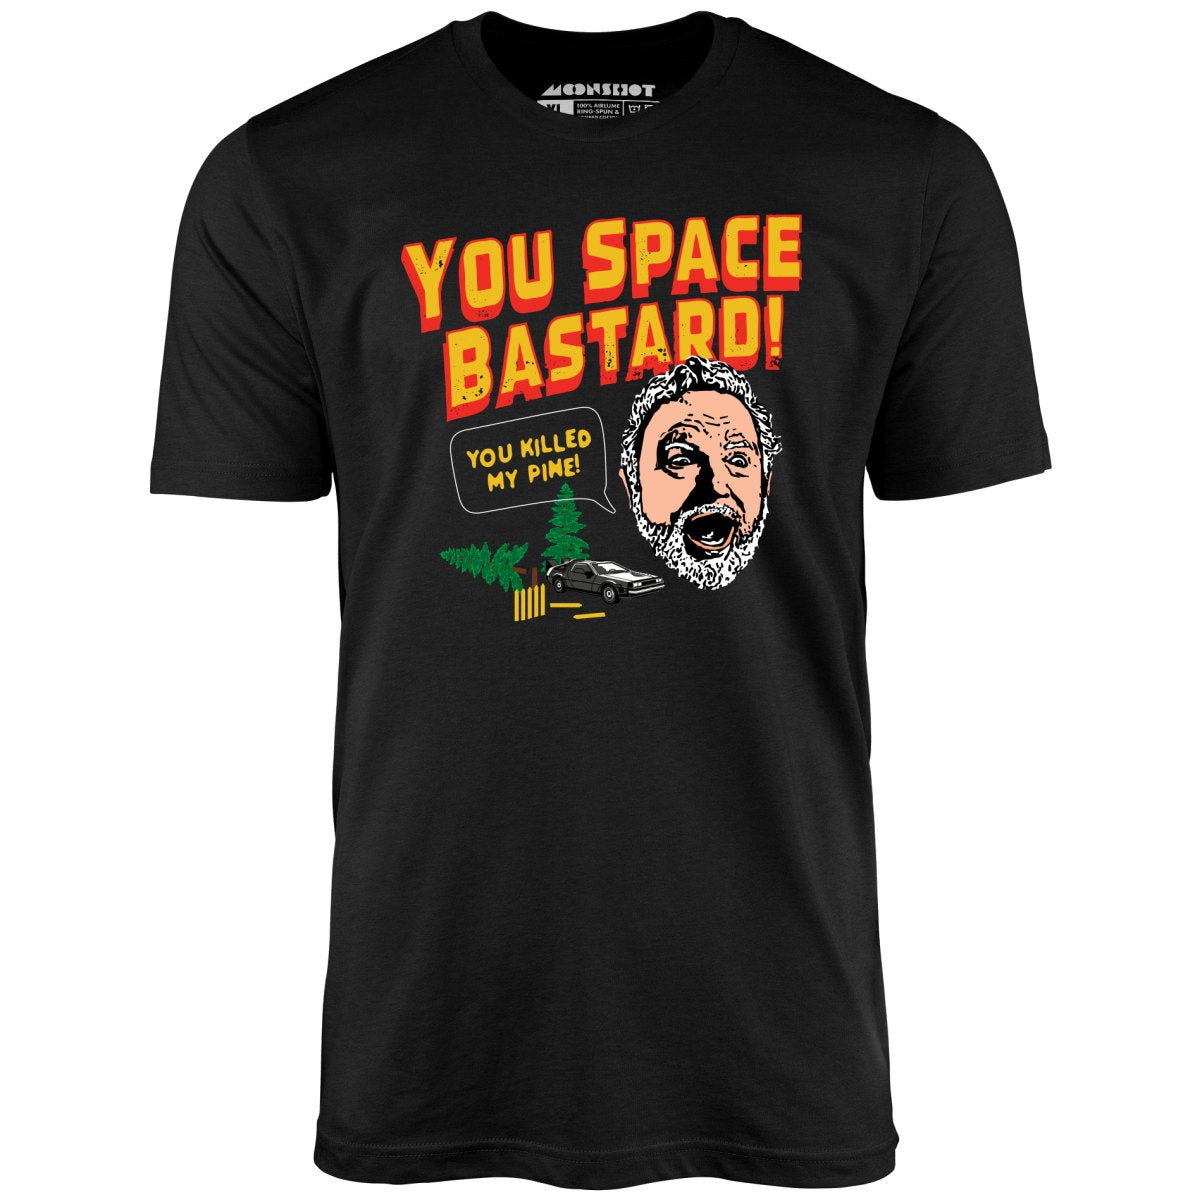 You Space Bastard! You Killed My Pine! - Unisex T-Shirt